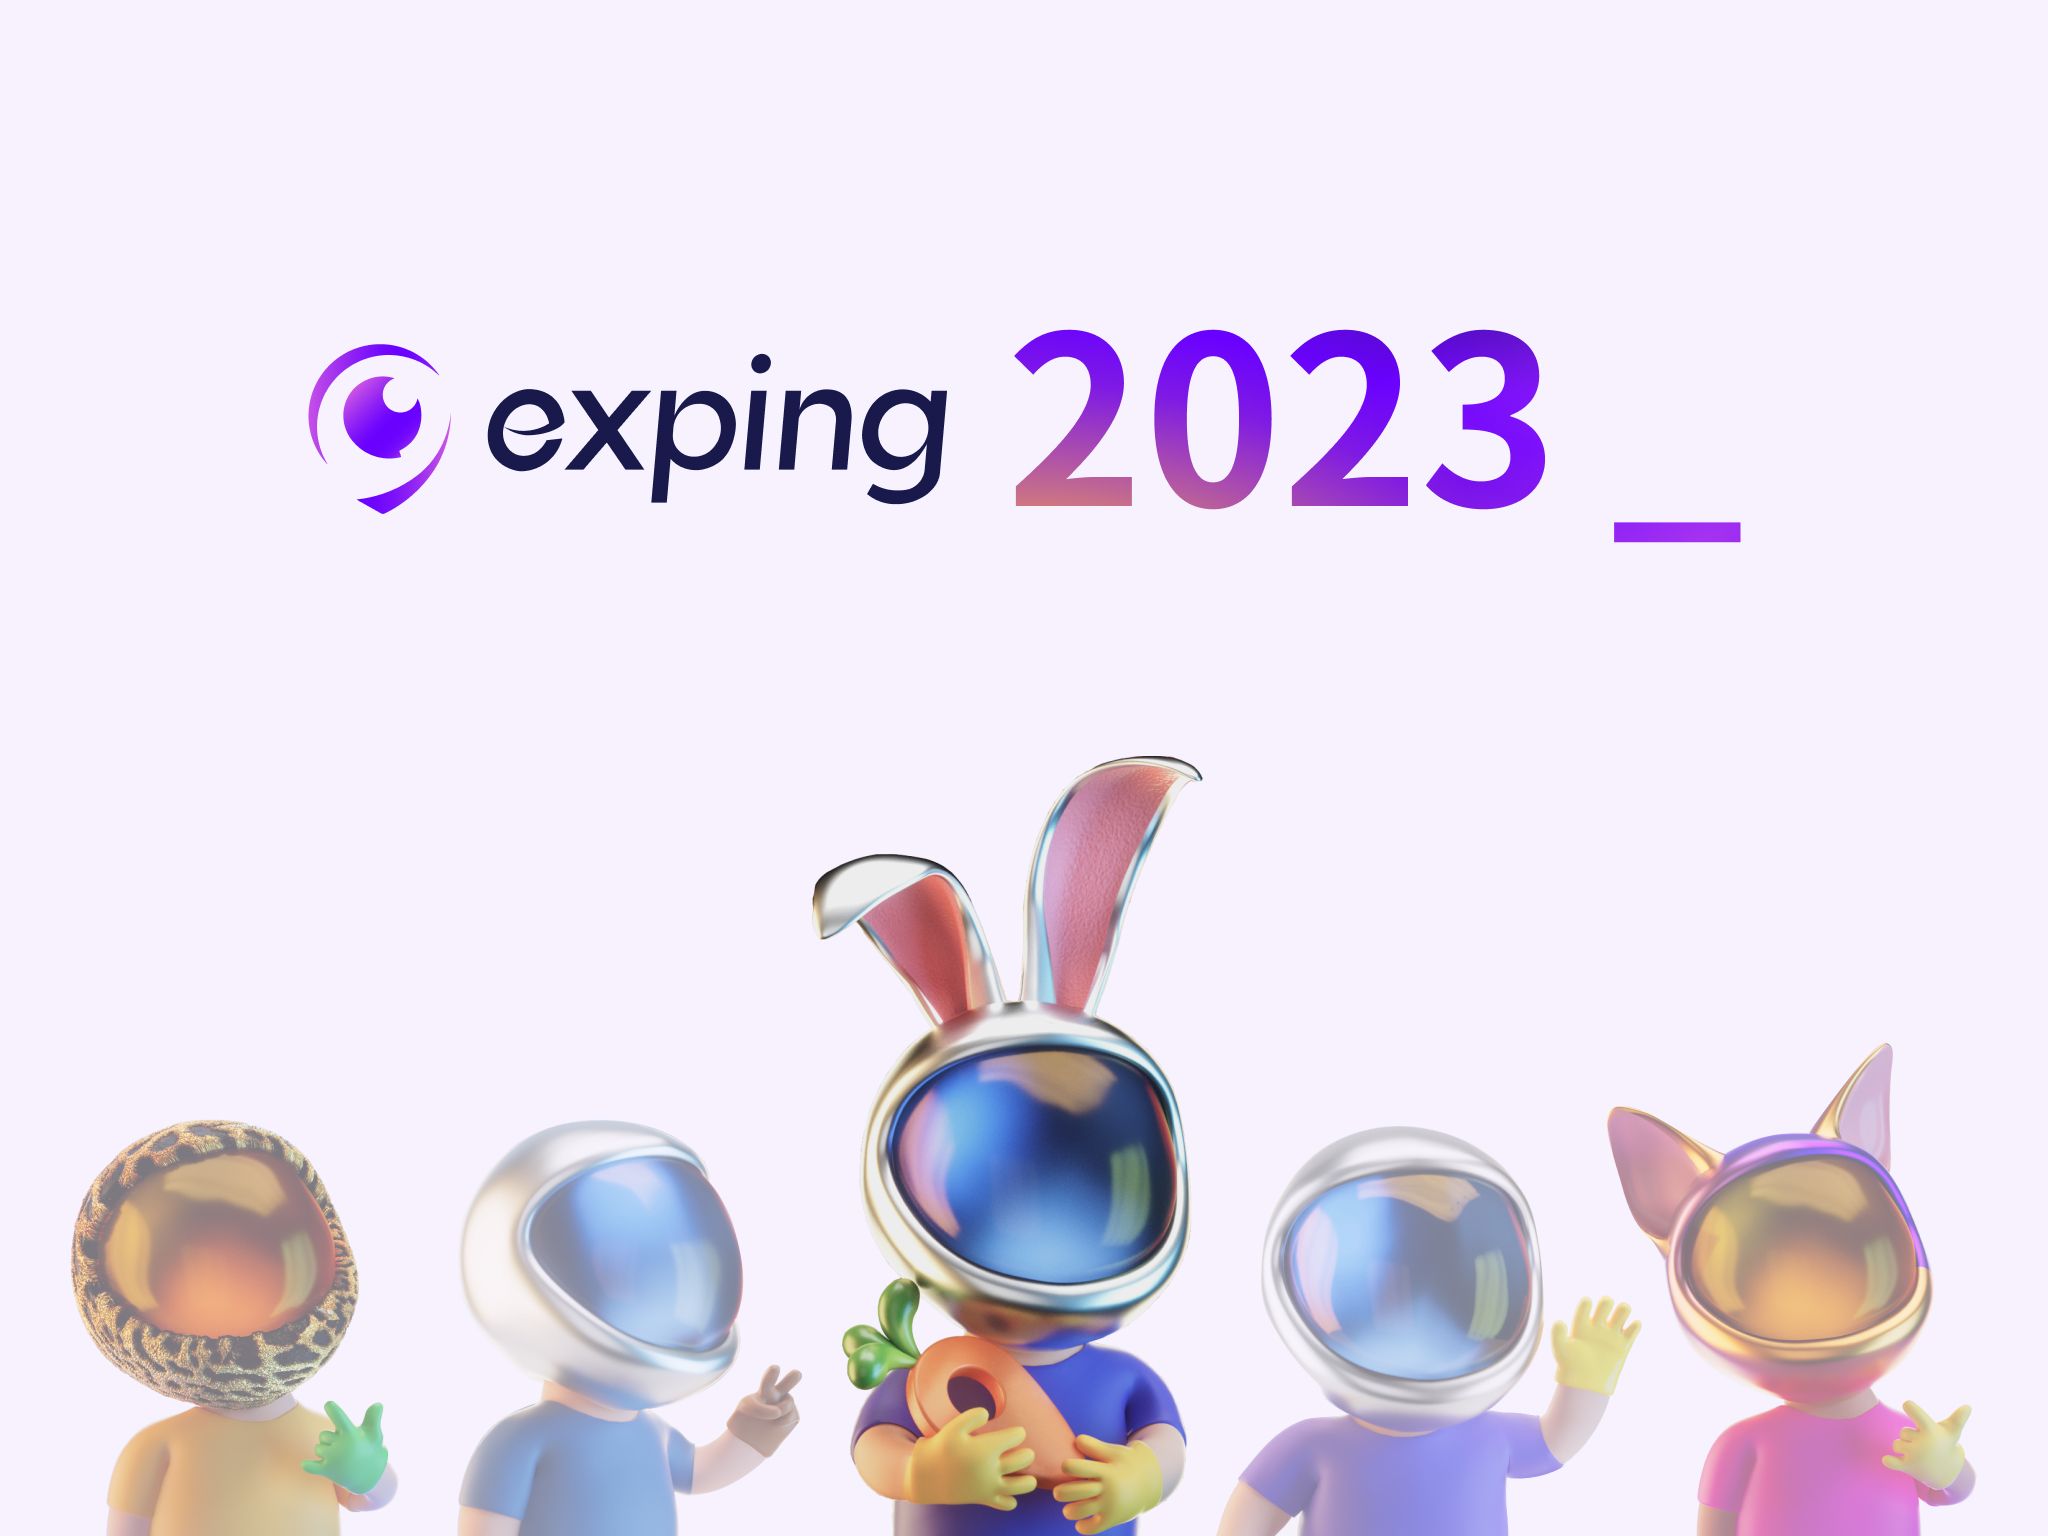 exping 2023｜先有路，才有里程碑